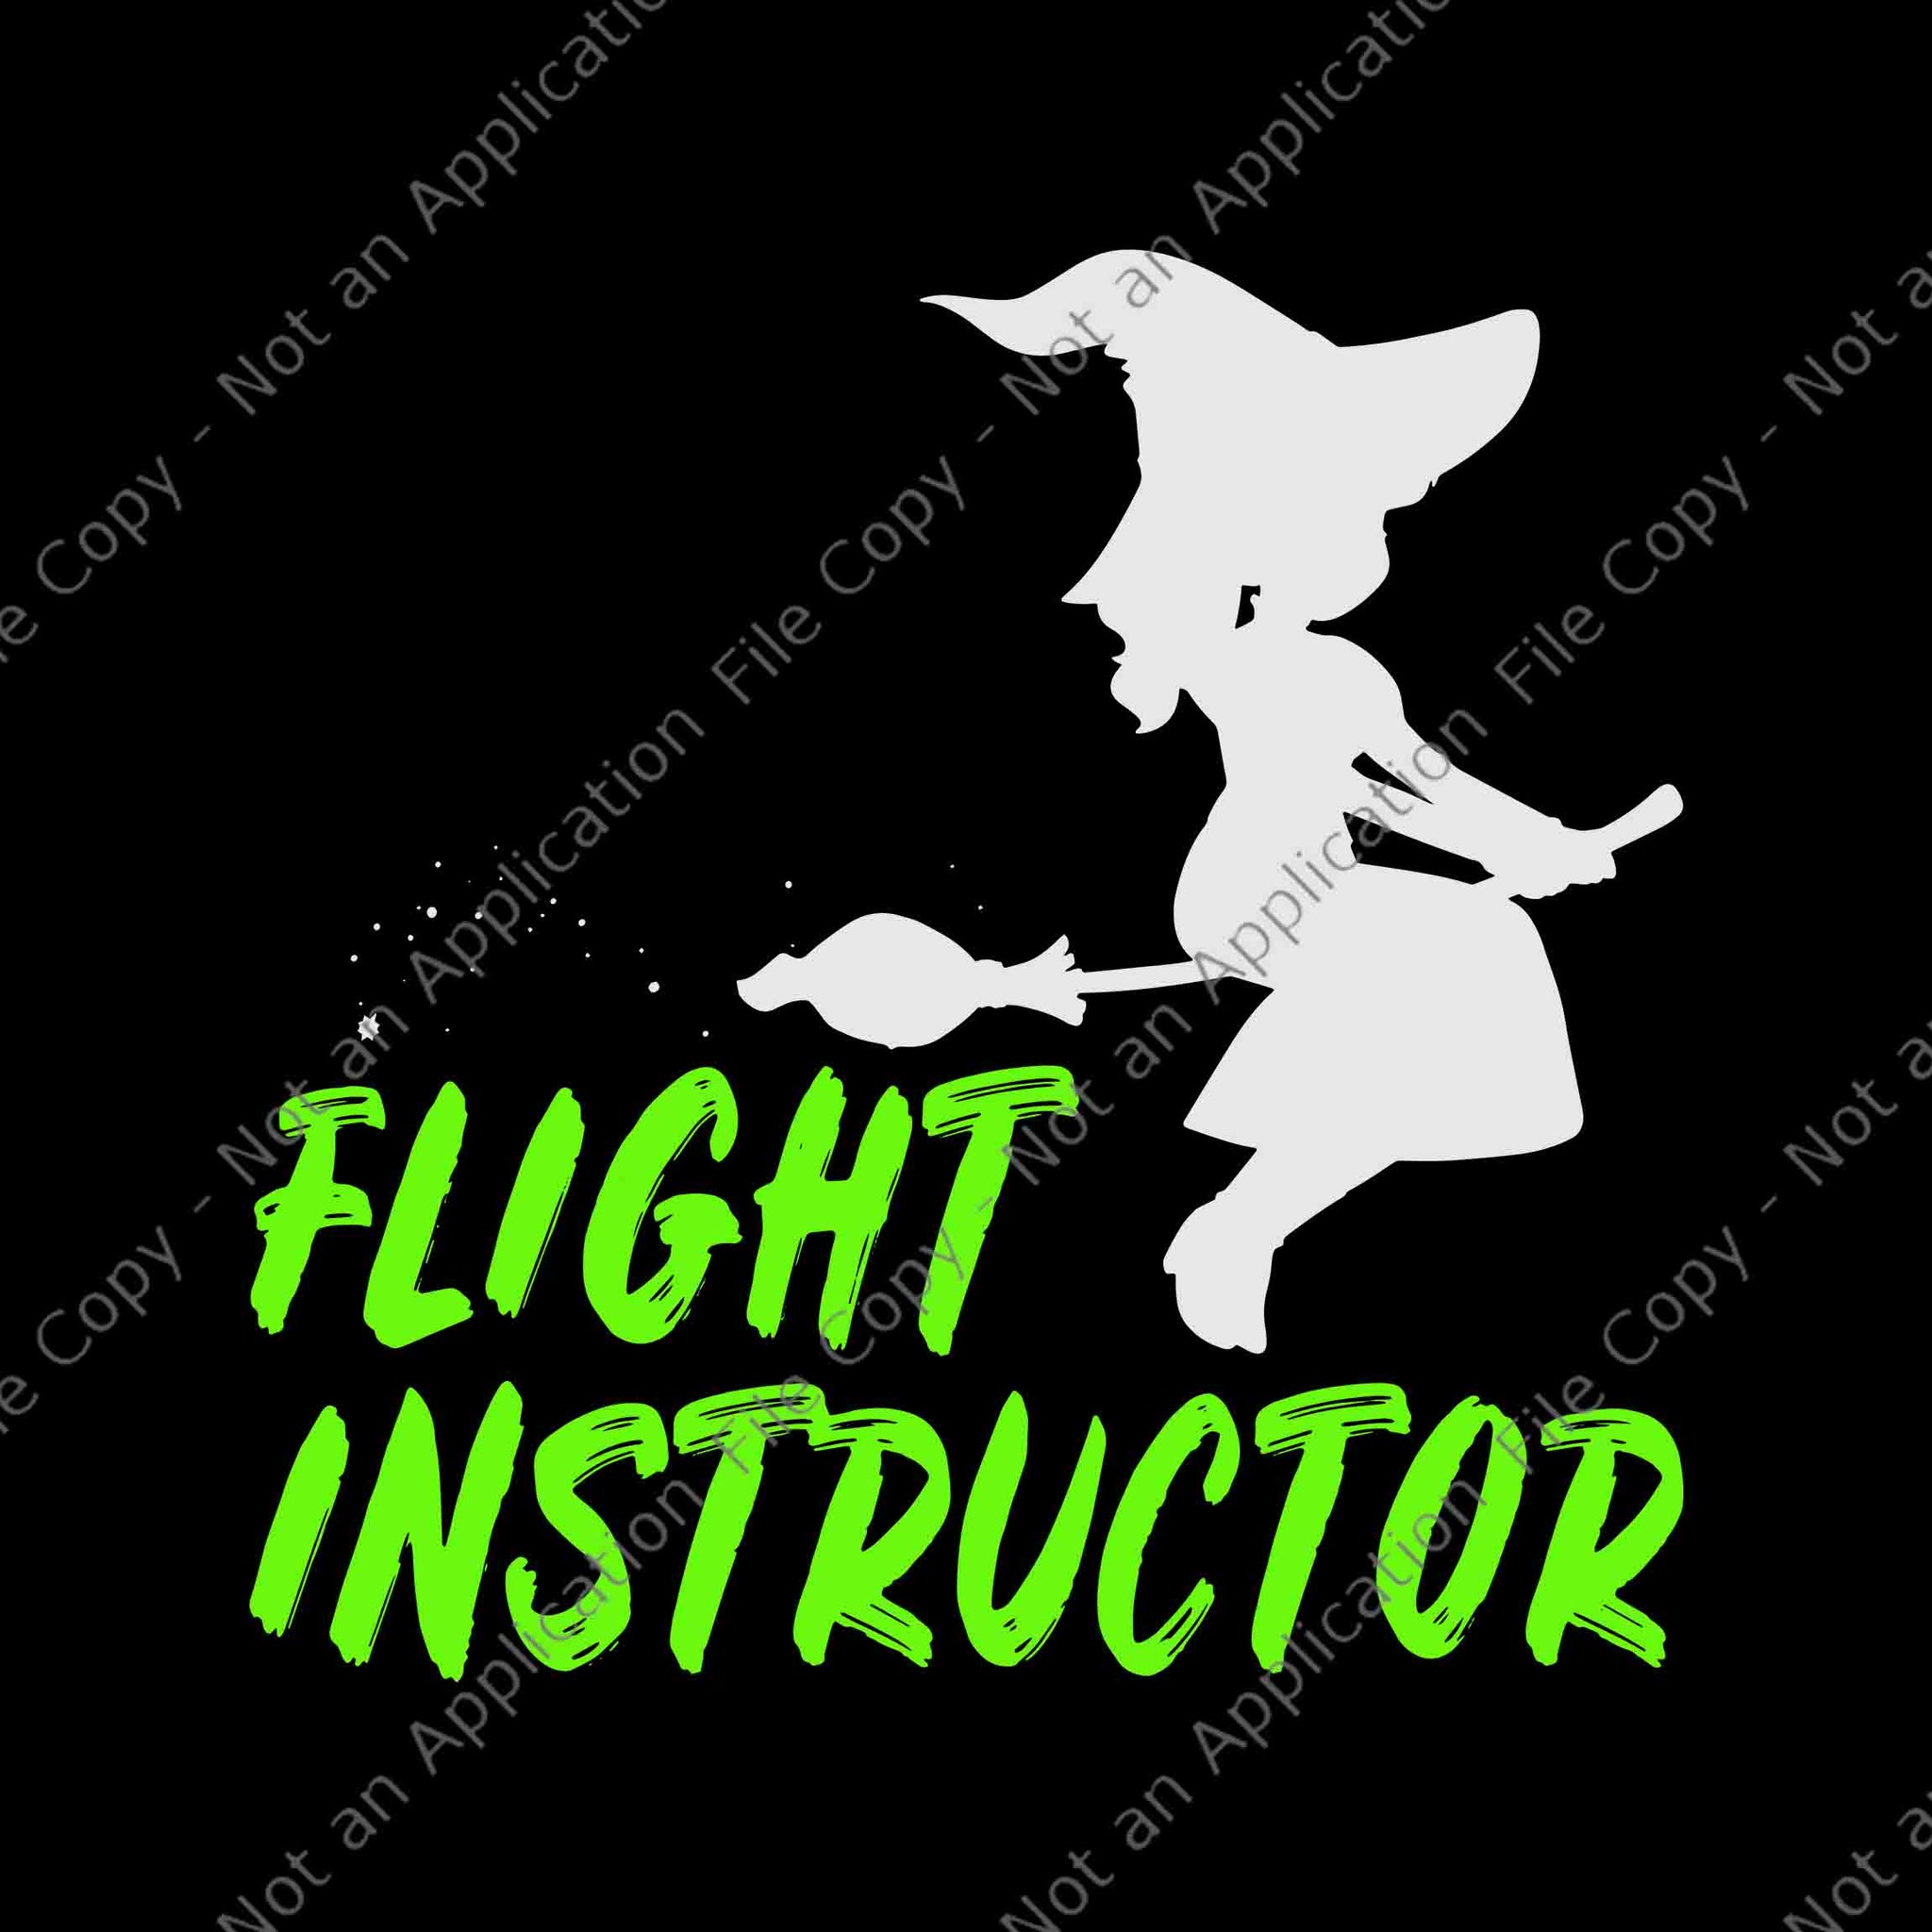 Fight Instructor Witch Svg, Halloween Witch Svg, Halloween Svg